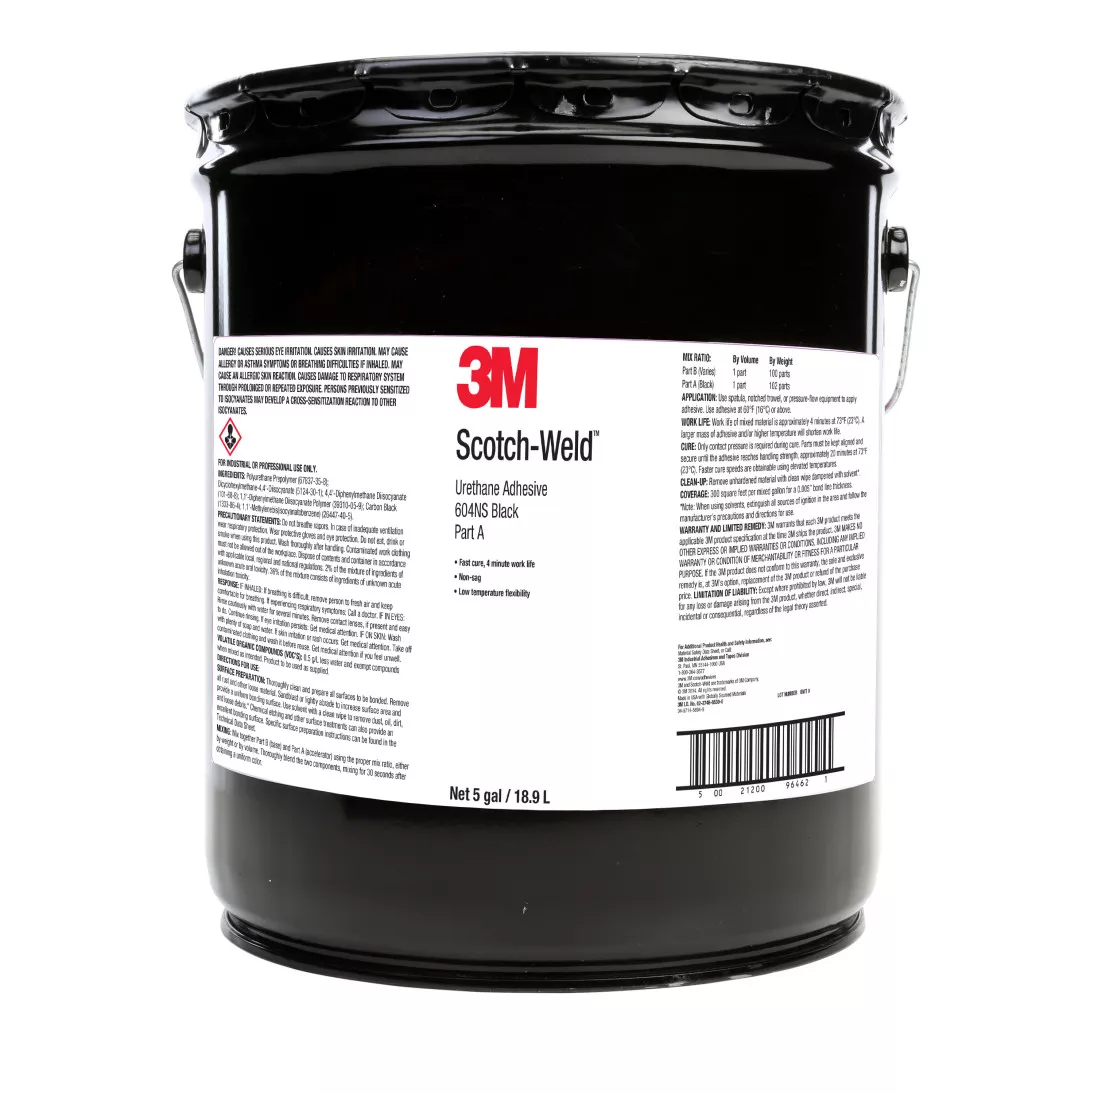 3M™ Scotch-Weld™ Urethane Adhesive 604NS, Black, Part A, 5 Gallon Drum
(Pail)